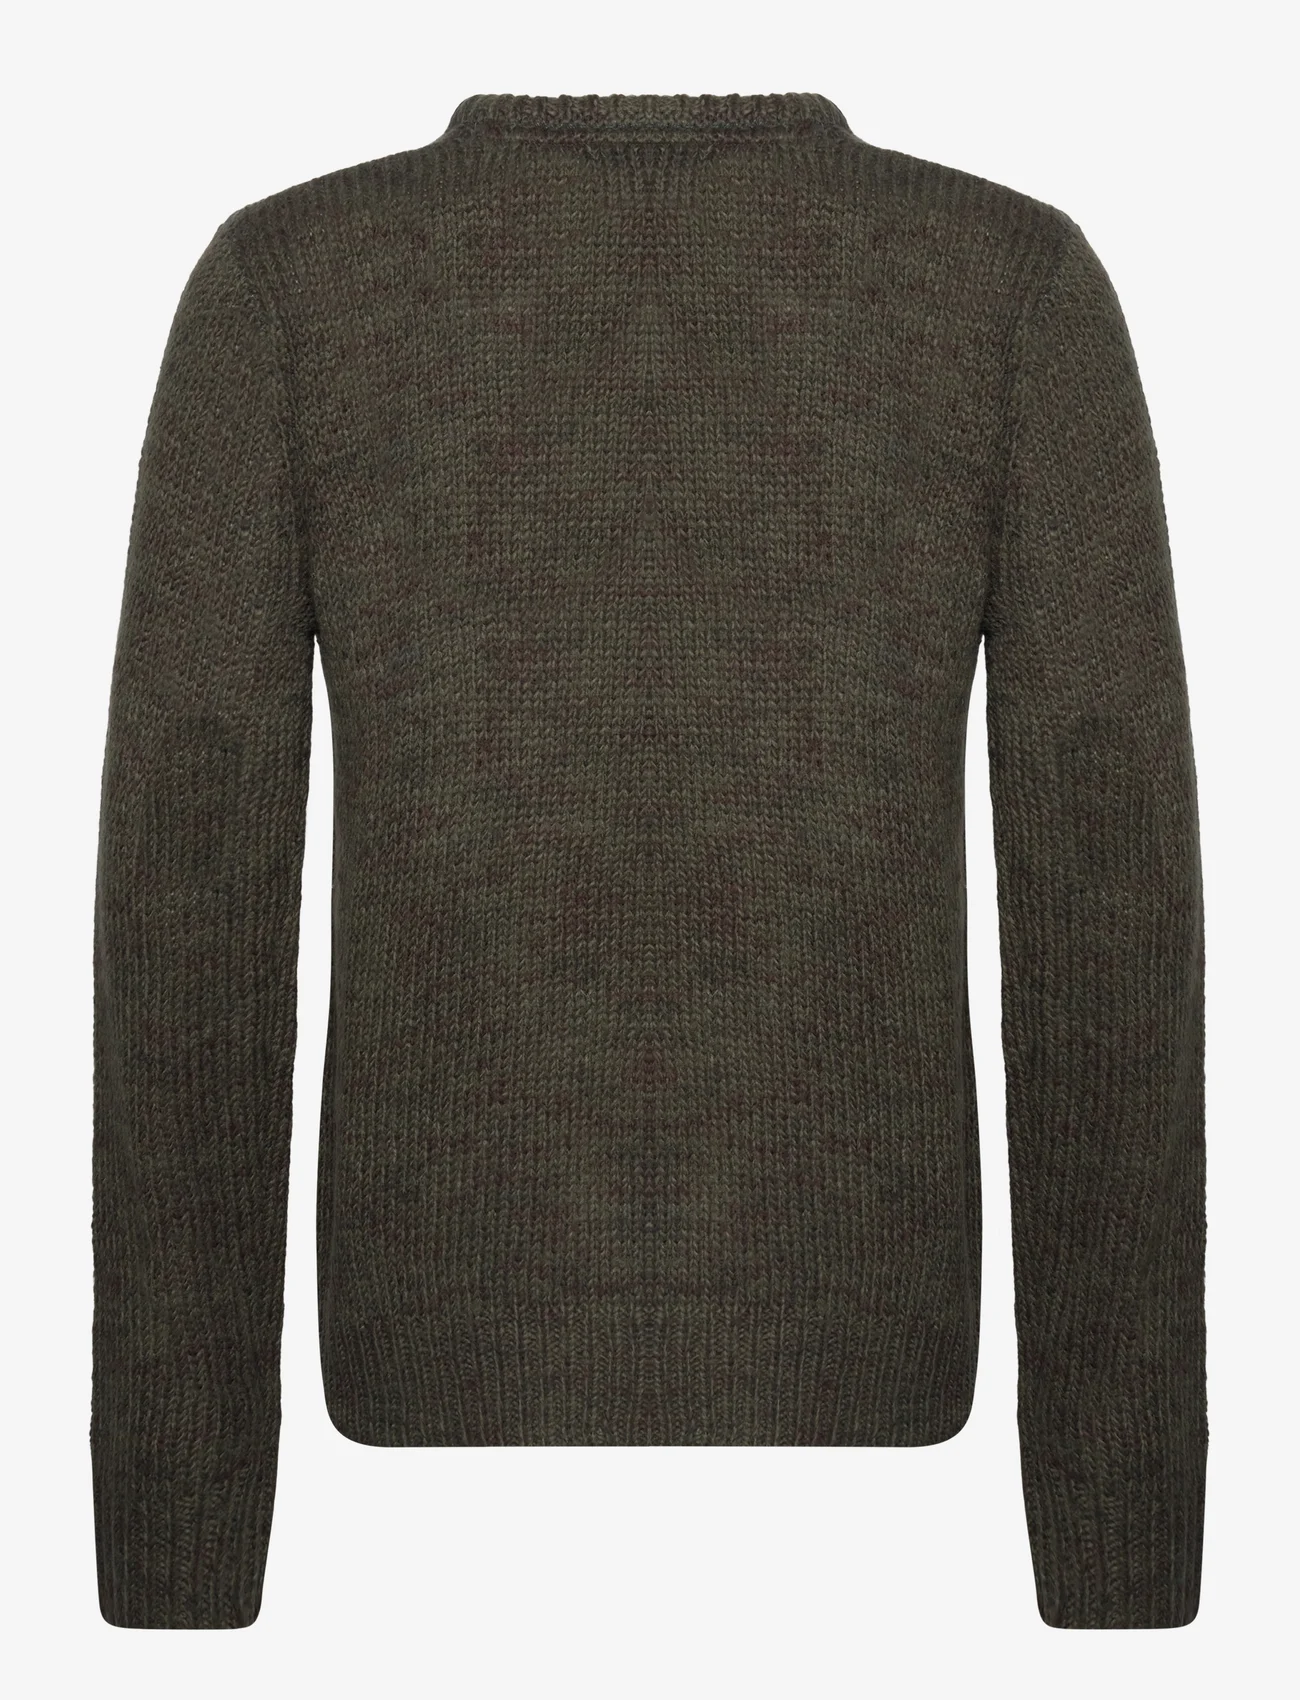 Revolution - Structured knit - trøjer - darkarmy - 1